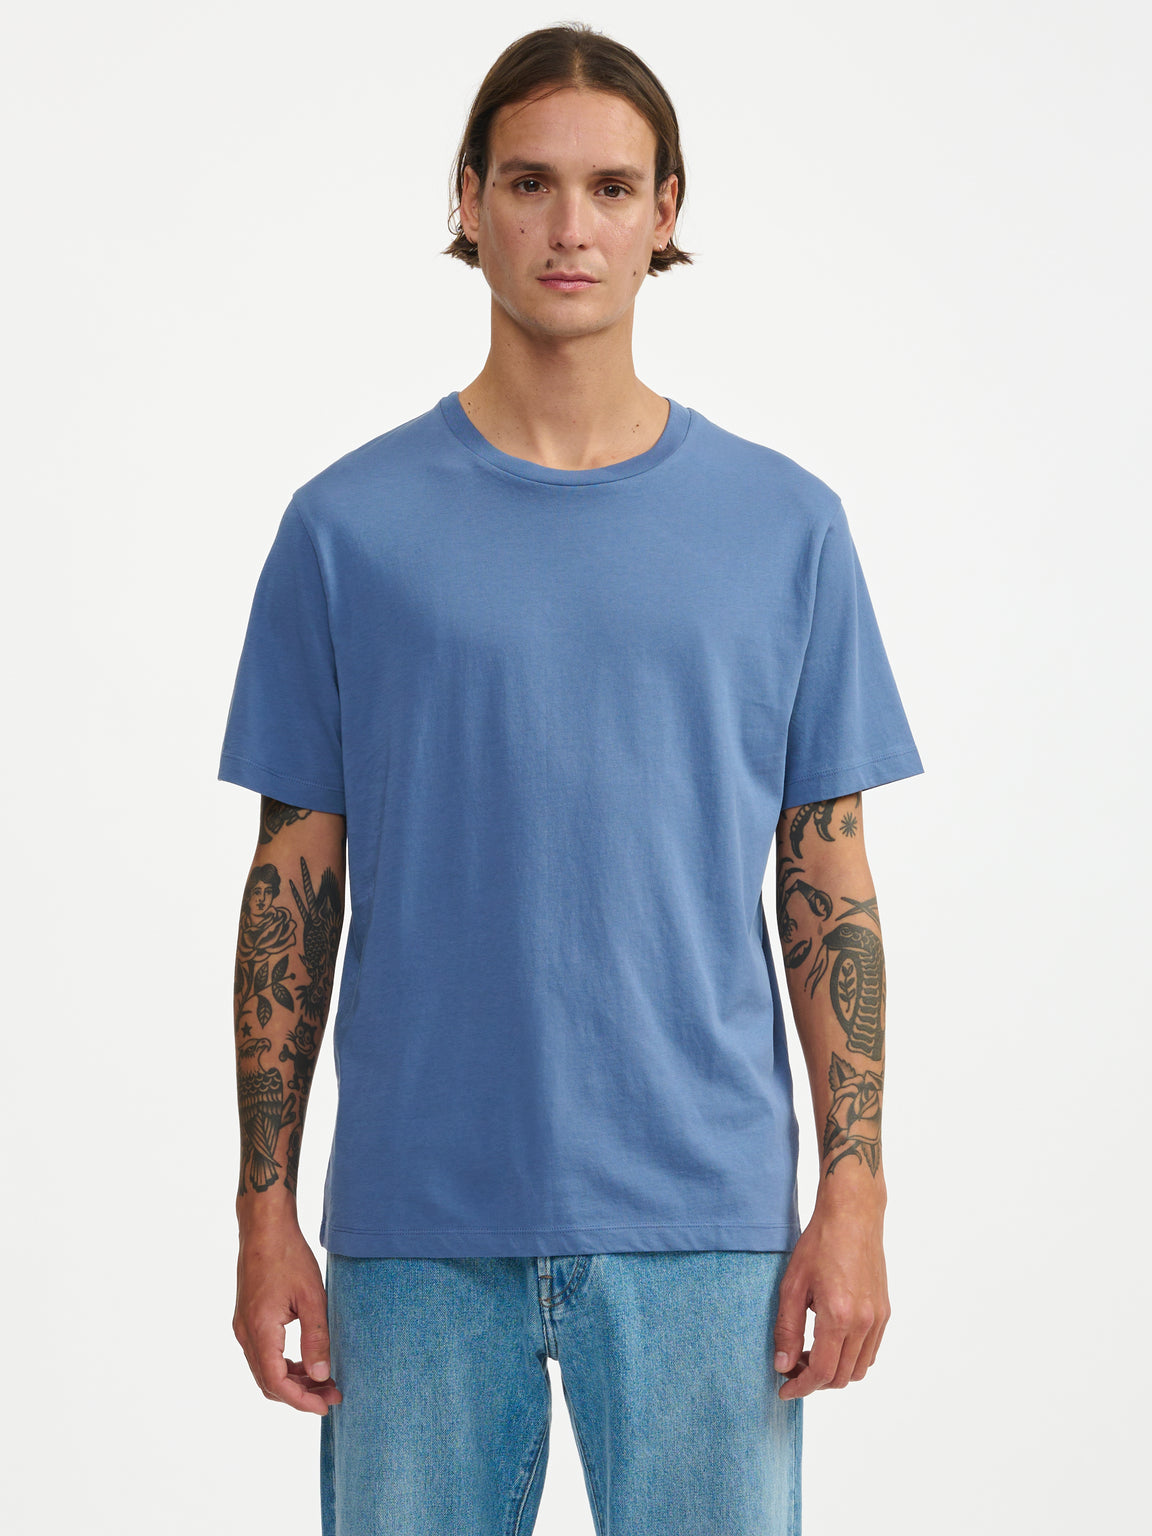 Vinx T-shirt - Blue | Men Collection | Bellerose